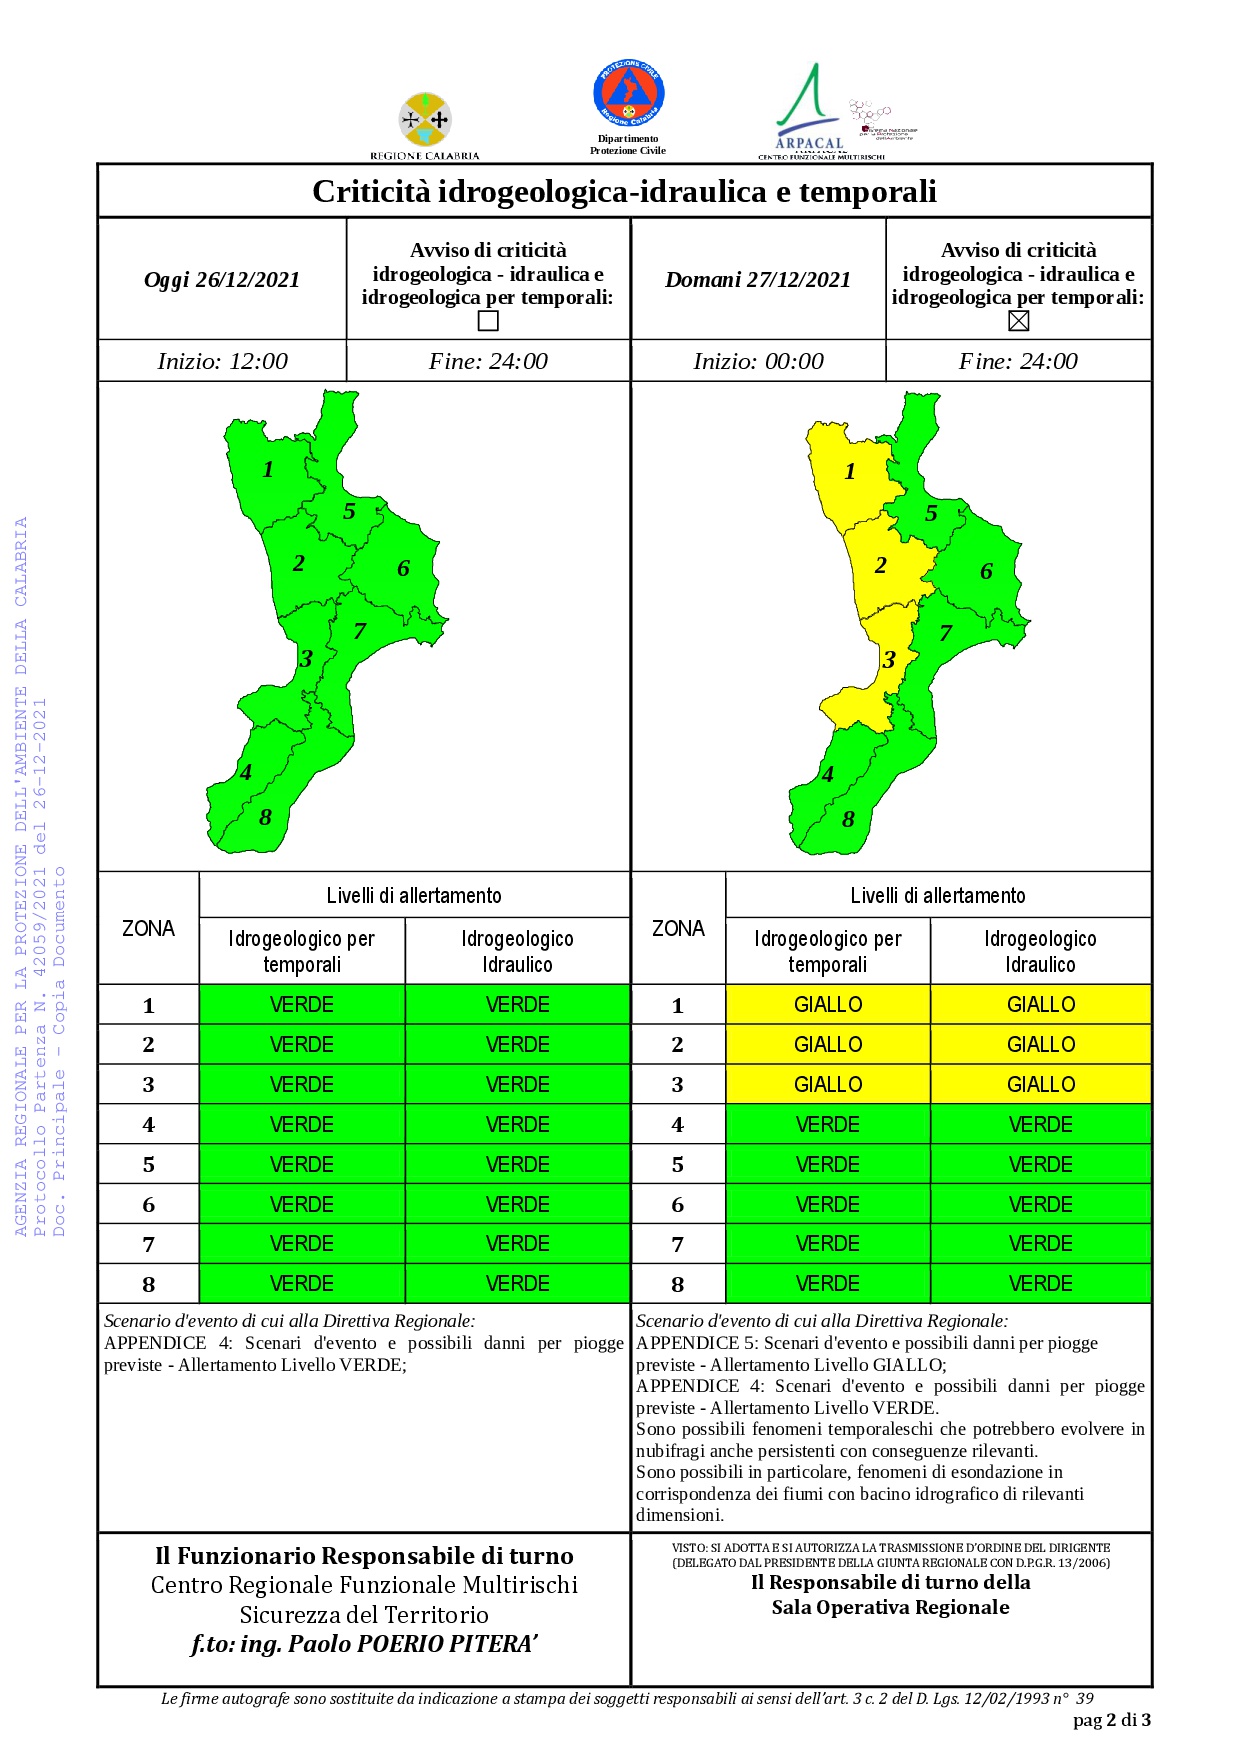 Criticità idrogeologica-idraulica e temporali in Calabria 26-12-2021